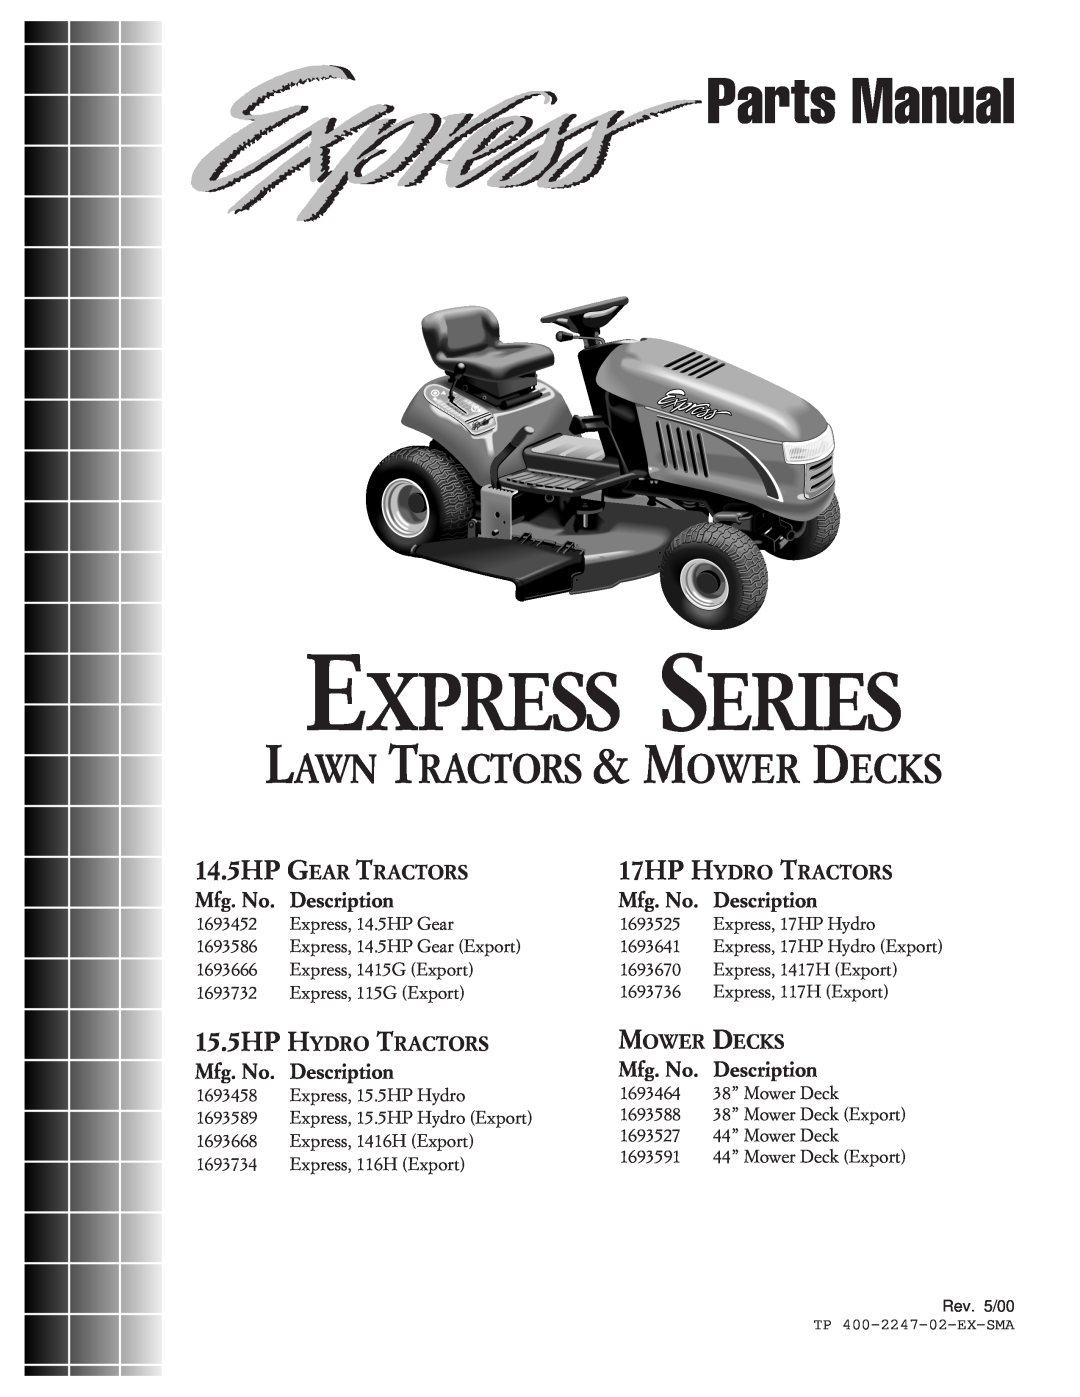 Simplicity Express Series manual Parts Manual, Lawn Tractors & Mower Decks, 15.5HP H, Mfg. No. Description, Ydro, Ractors 